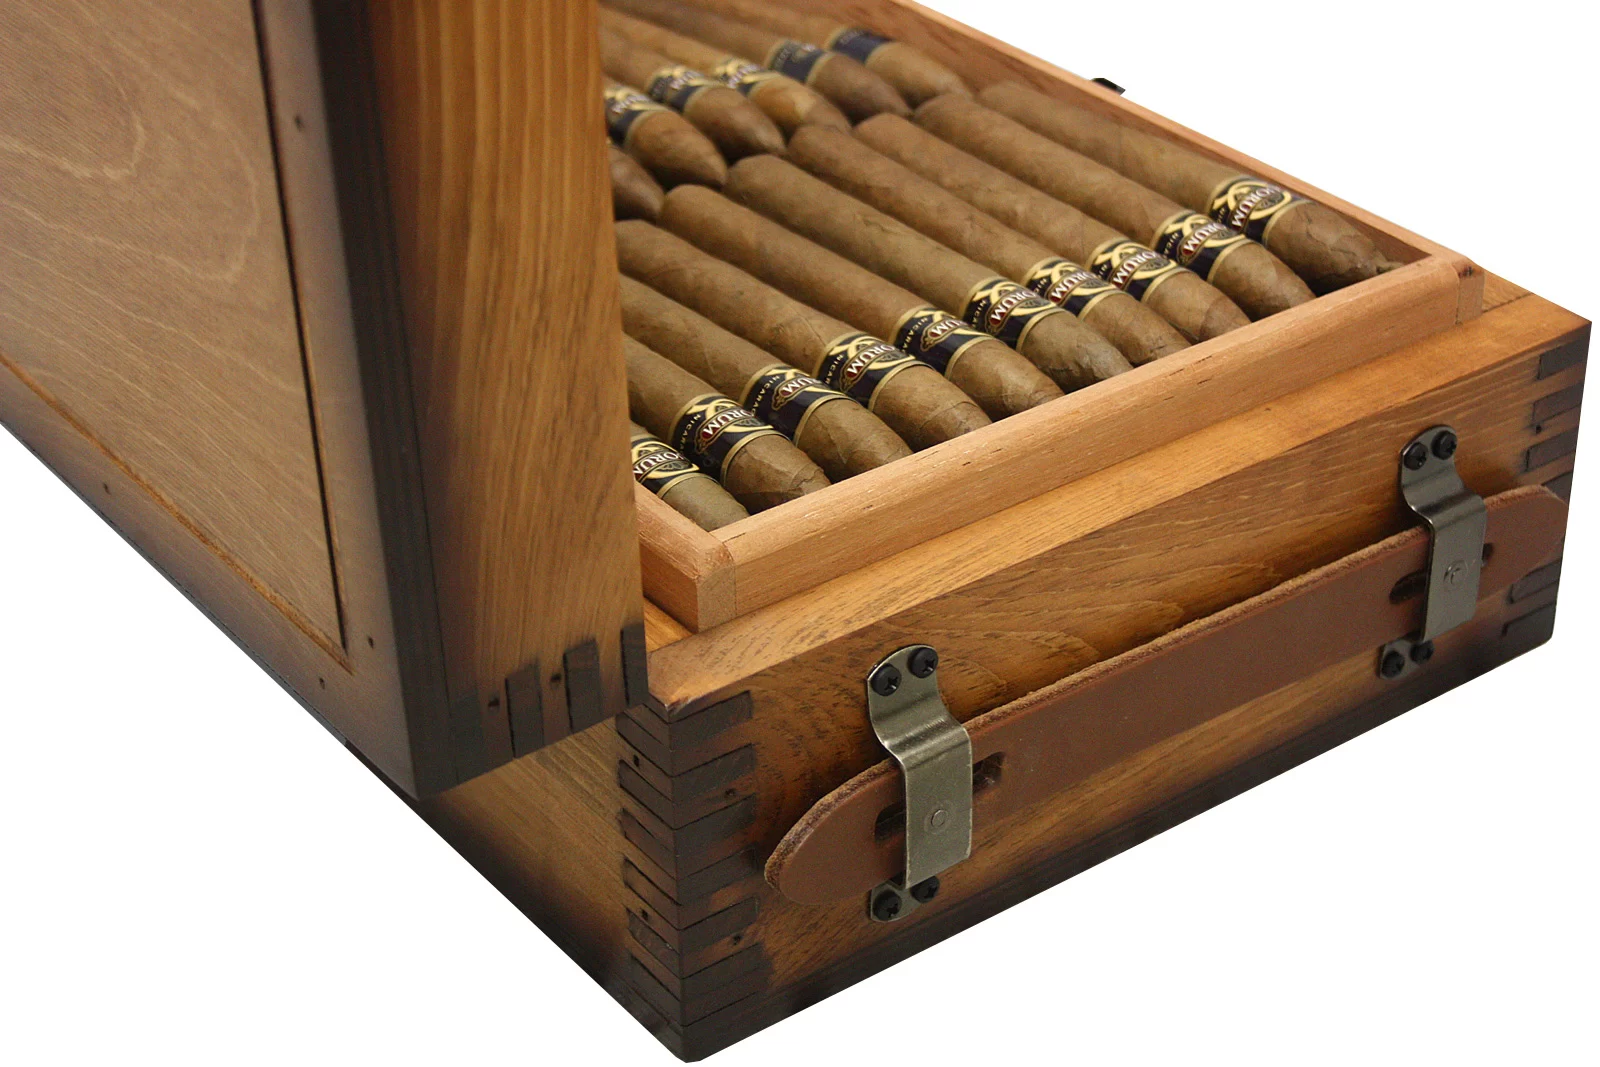 https://relicwood.com/wp-content/uploads/2017/08/CUSTOM-humidor-cigar-box-2.jpg